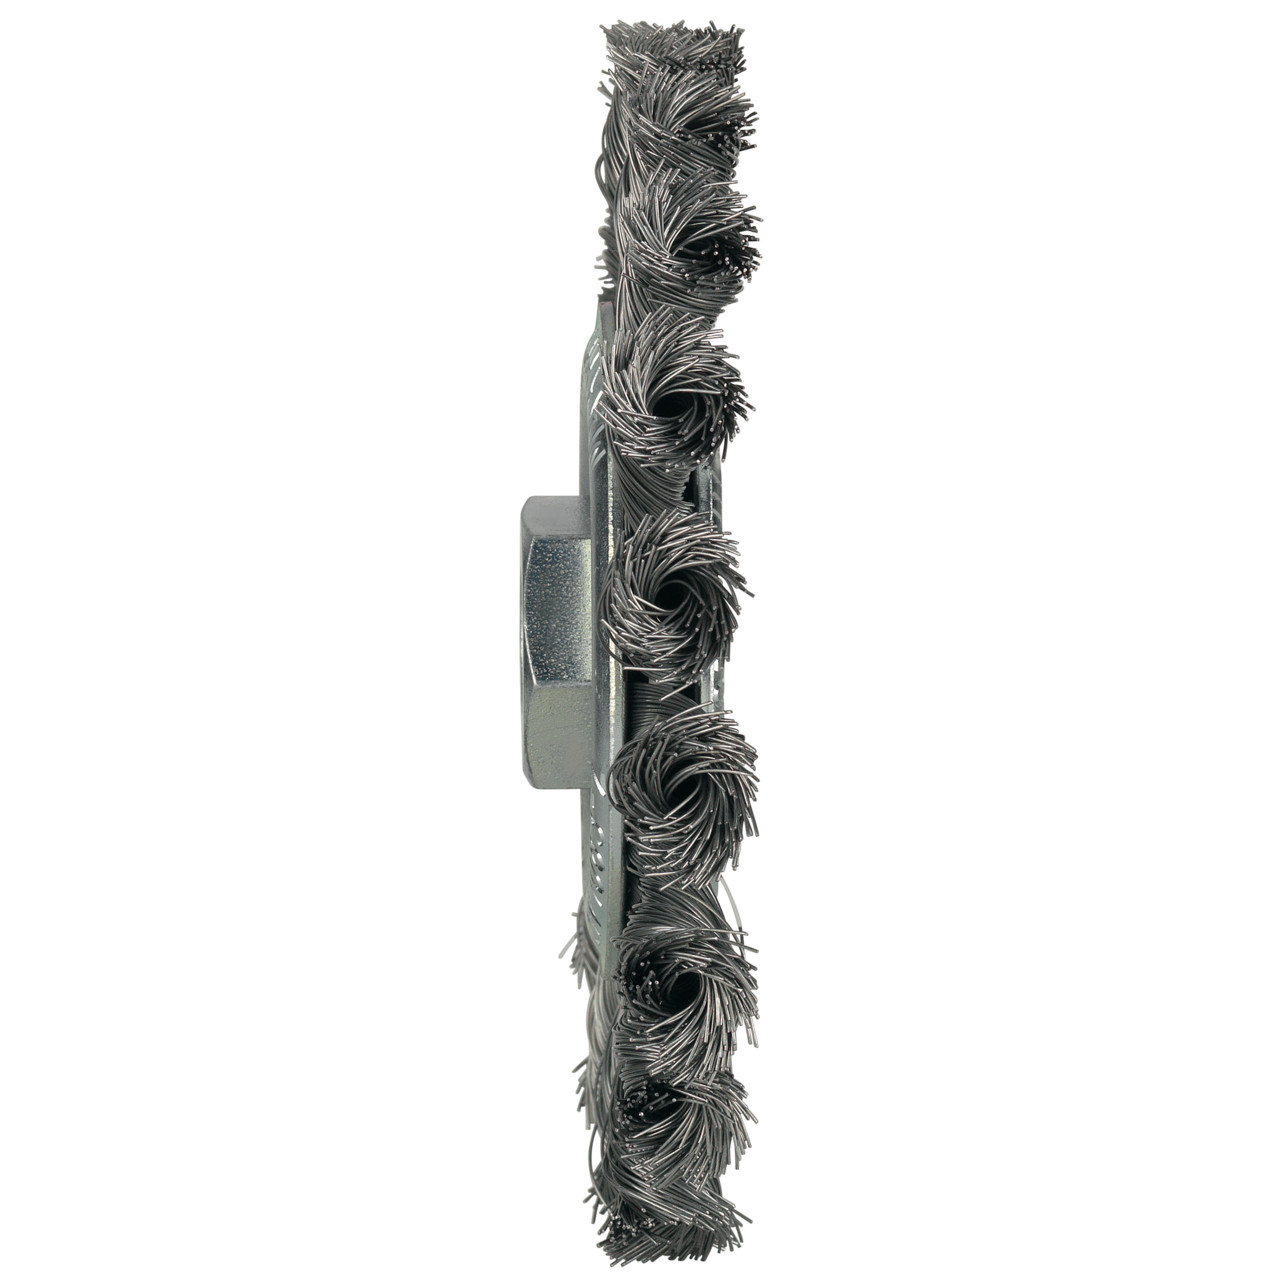 Tyrolit Cepillos para ruedas DxAxLxGE 115x11x23xM14 Para acero, forma: 1RDZ - (cepillo para ruedas), Art. 938680